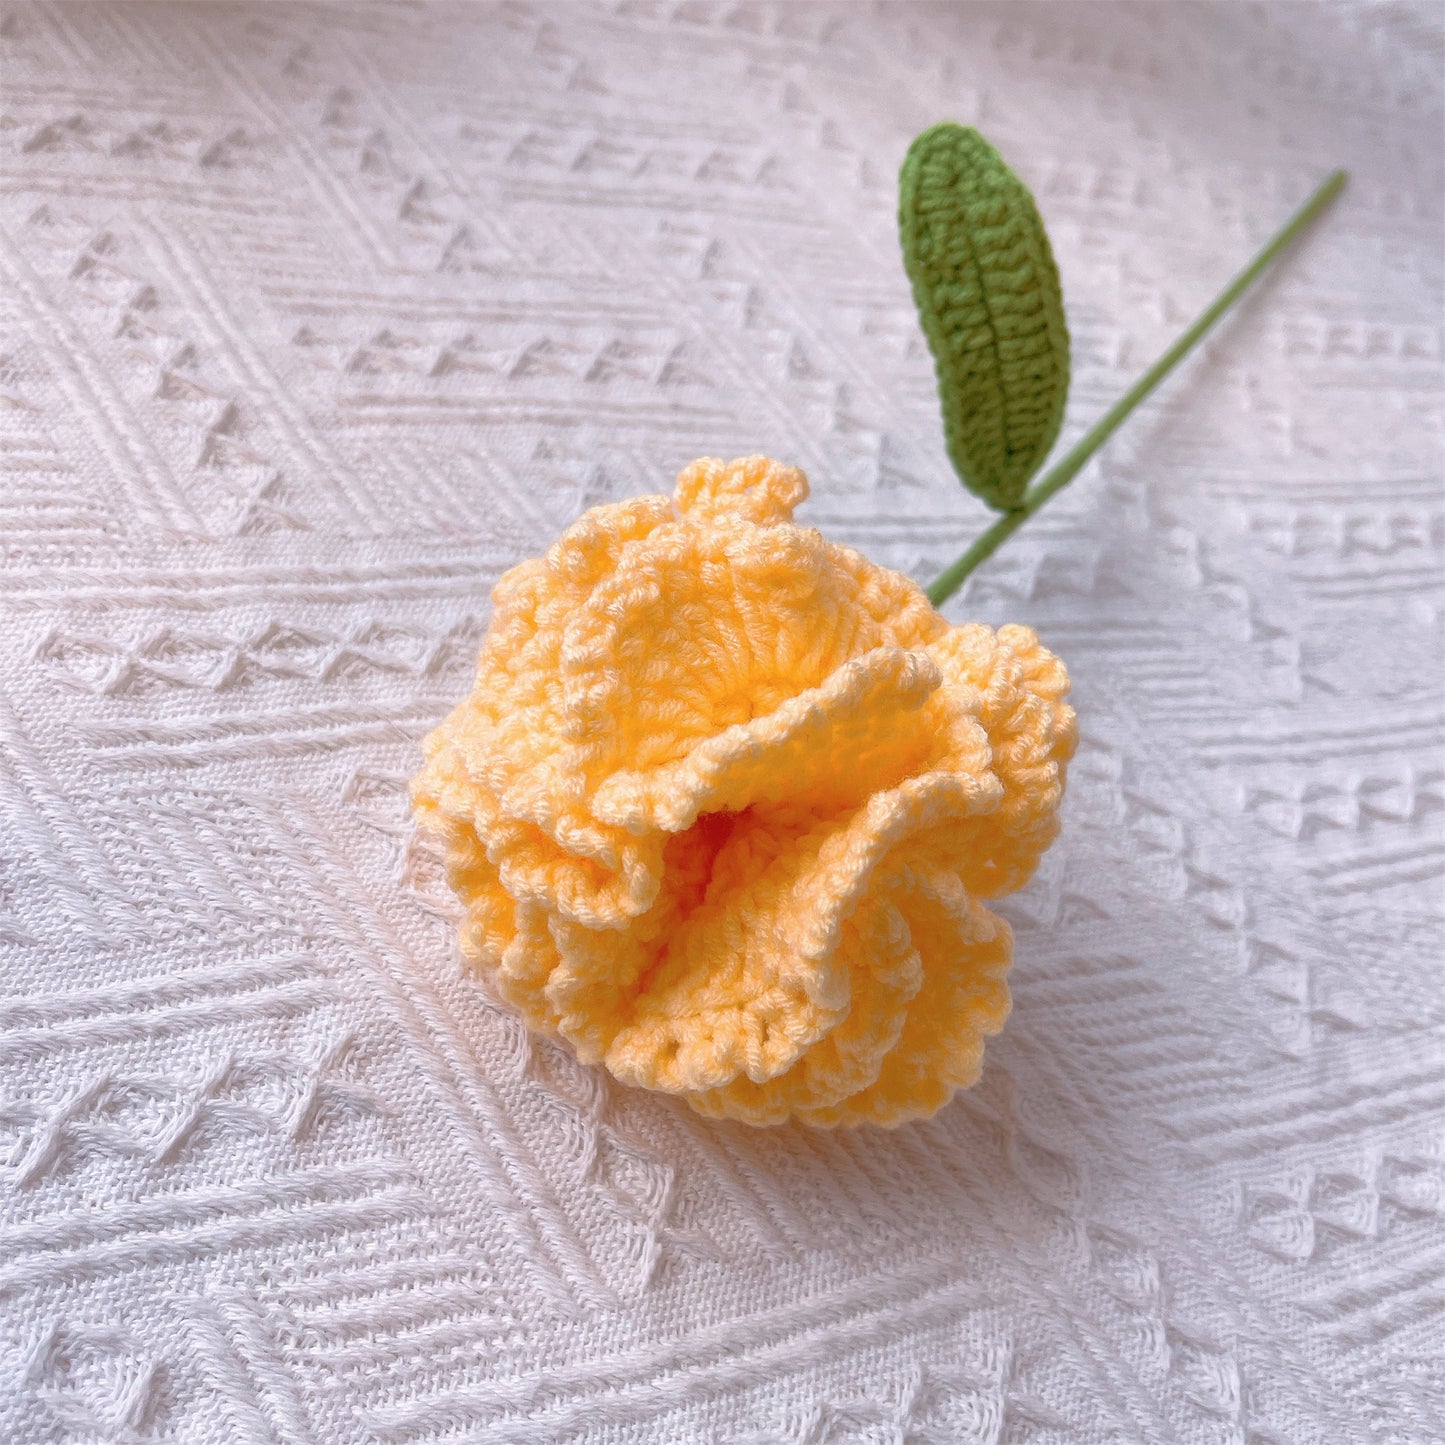 Handmade Crocheted Lemon Zest Serenade Bouquet - Lemon, Gardenia, and Carnation - a Symbol of Pure Love and Joy